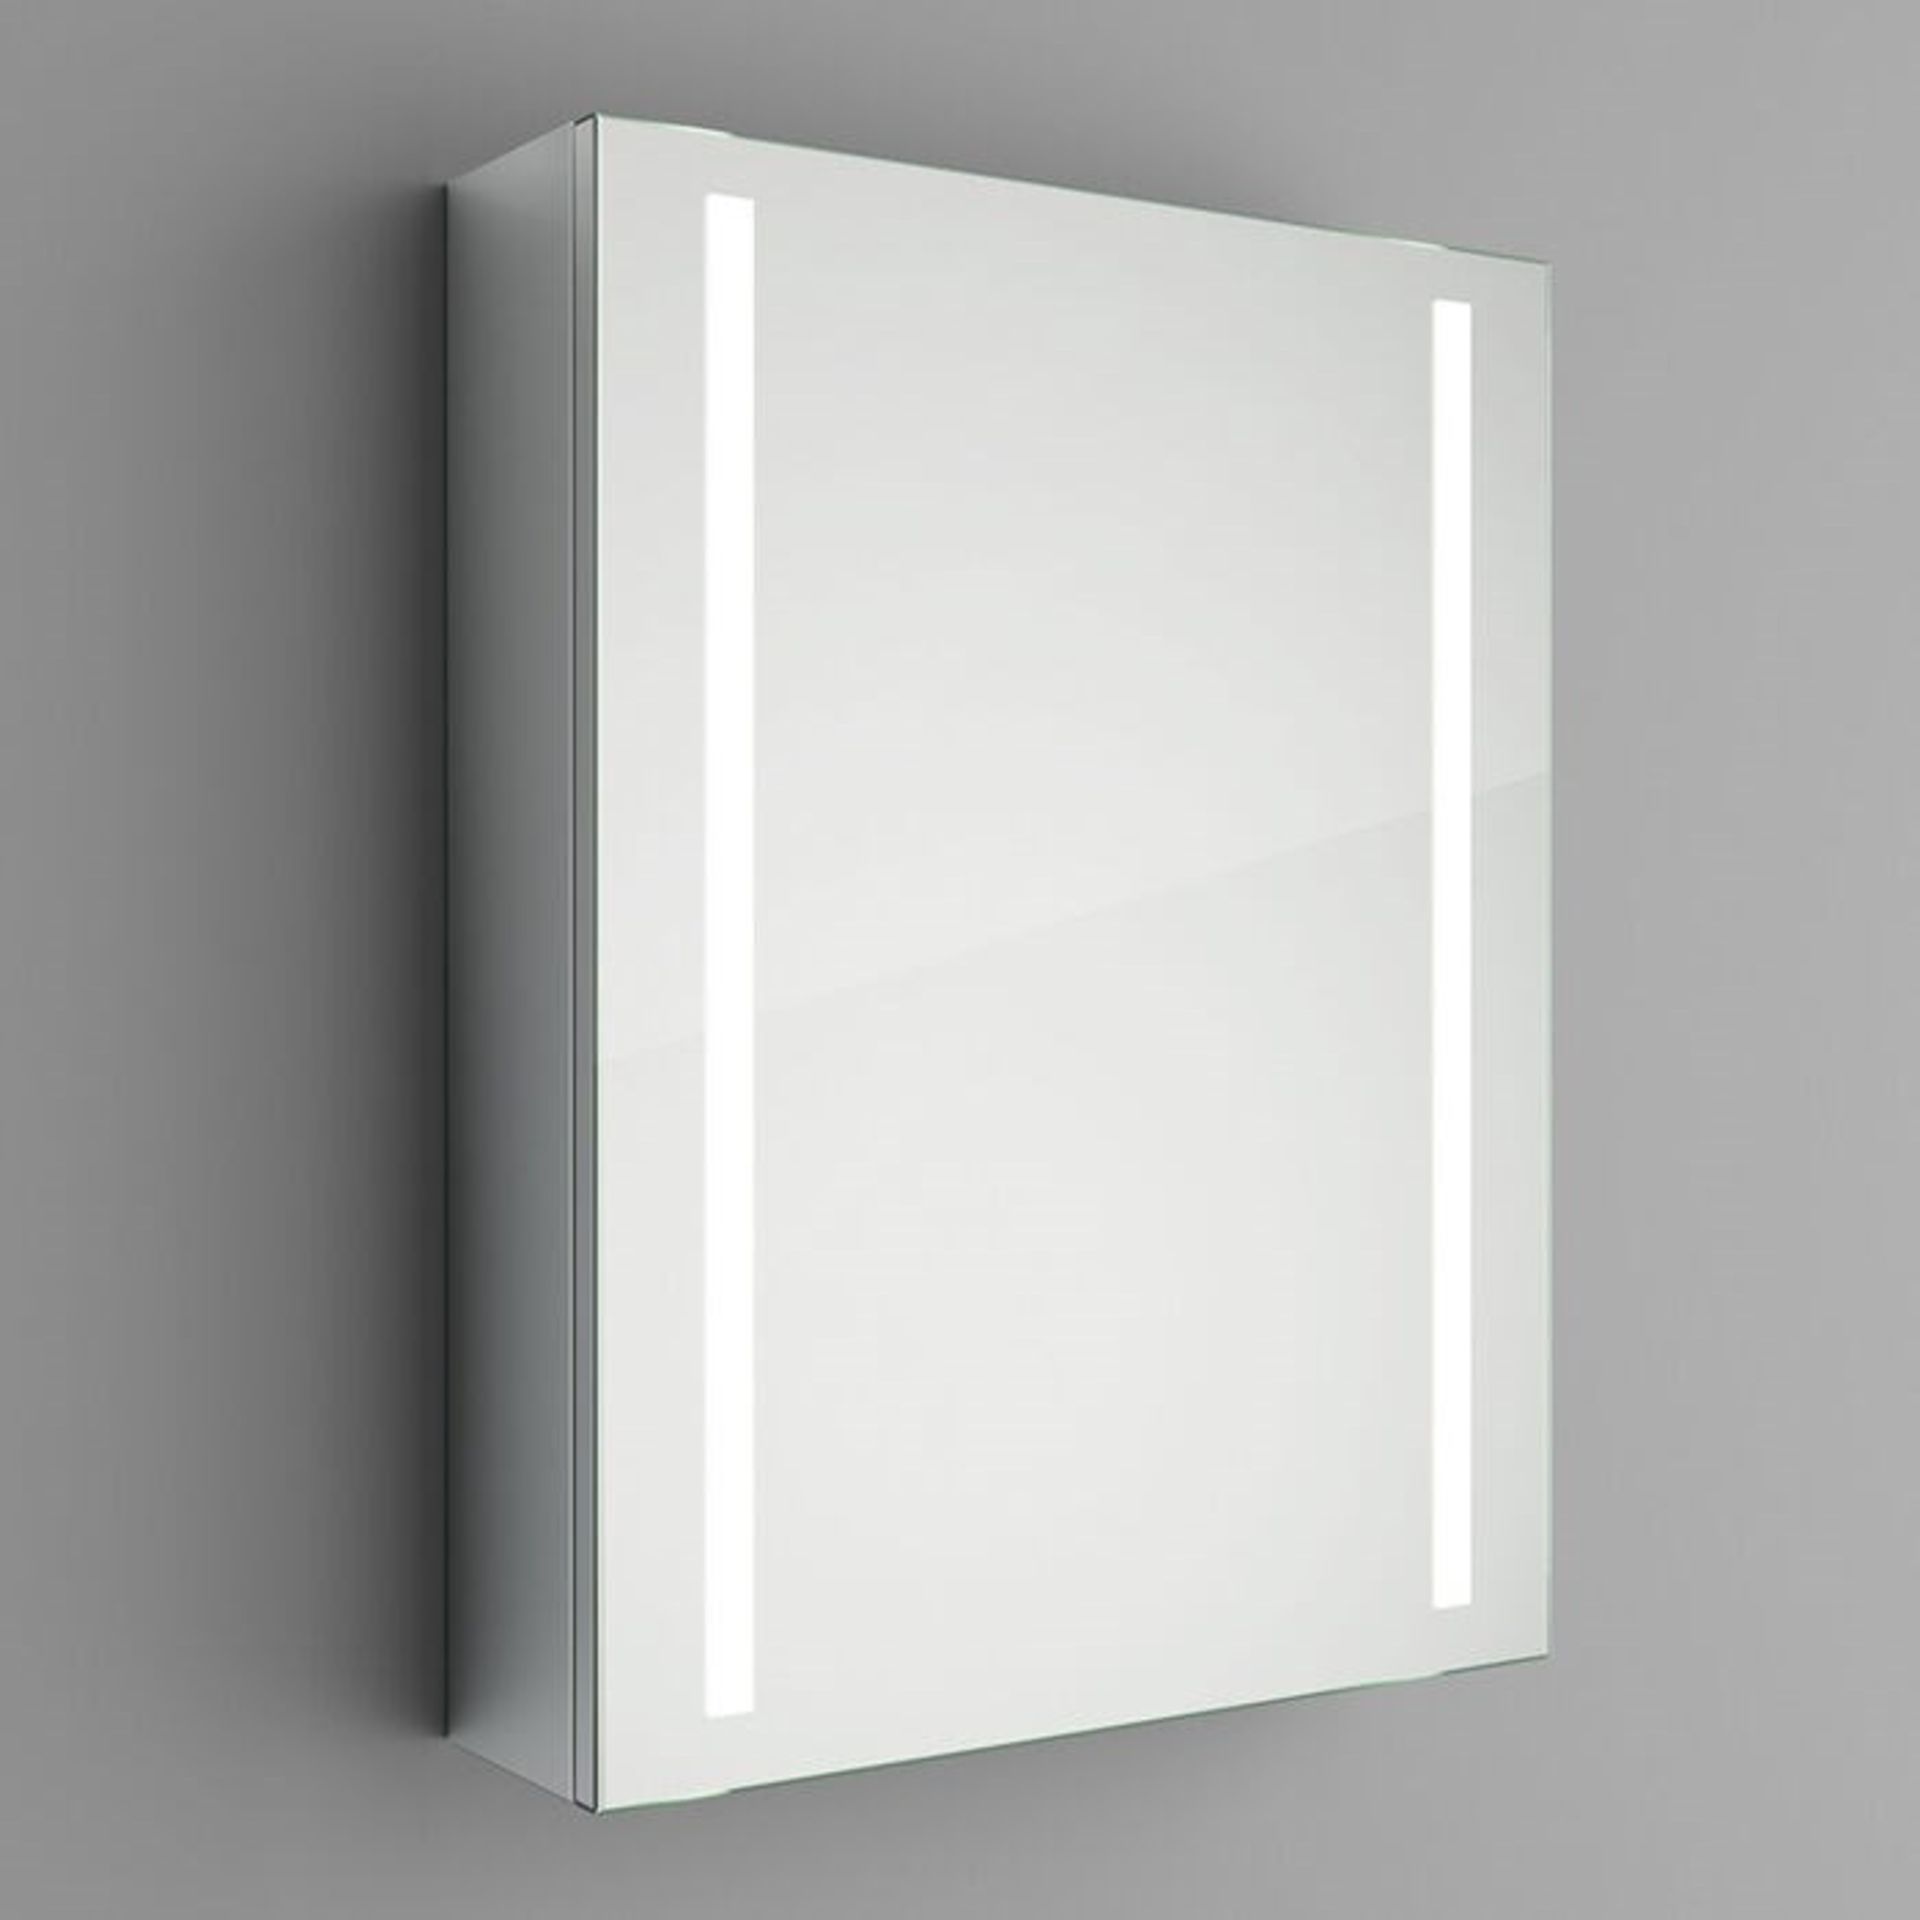 (RK2) 500x650mm Dawn Illuminated LED Mirror Cabinet. Energy efficient LED lighting, adding a c... - Image 5 of 5